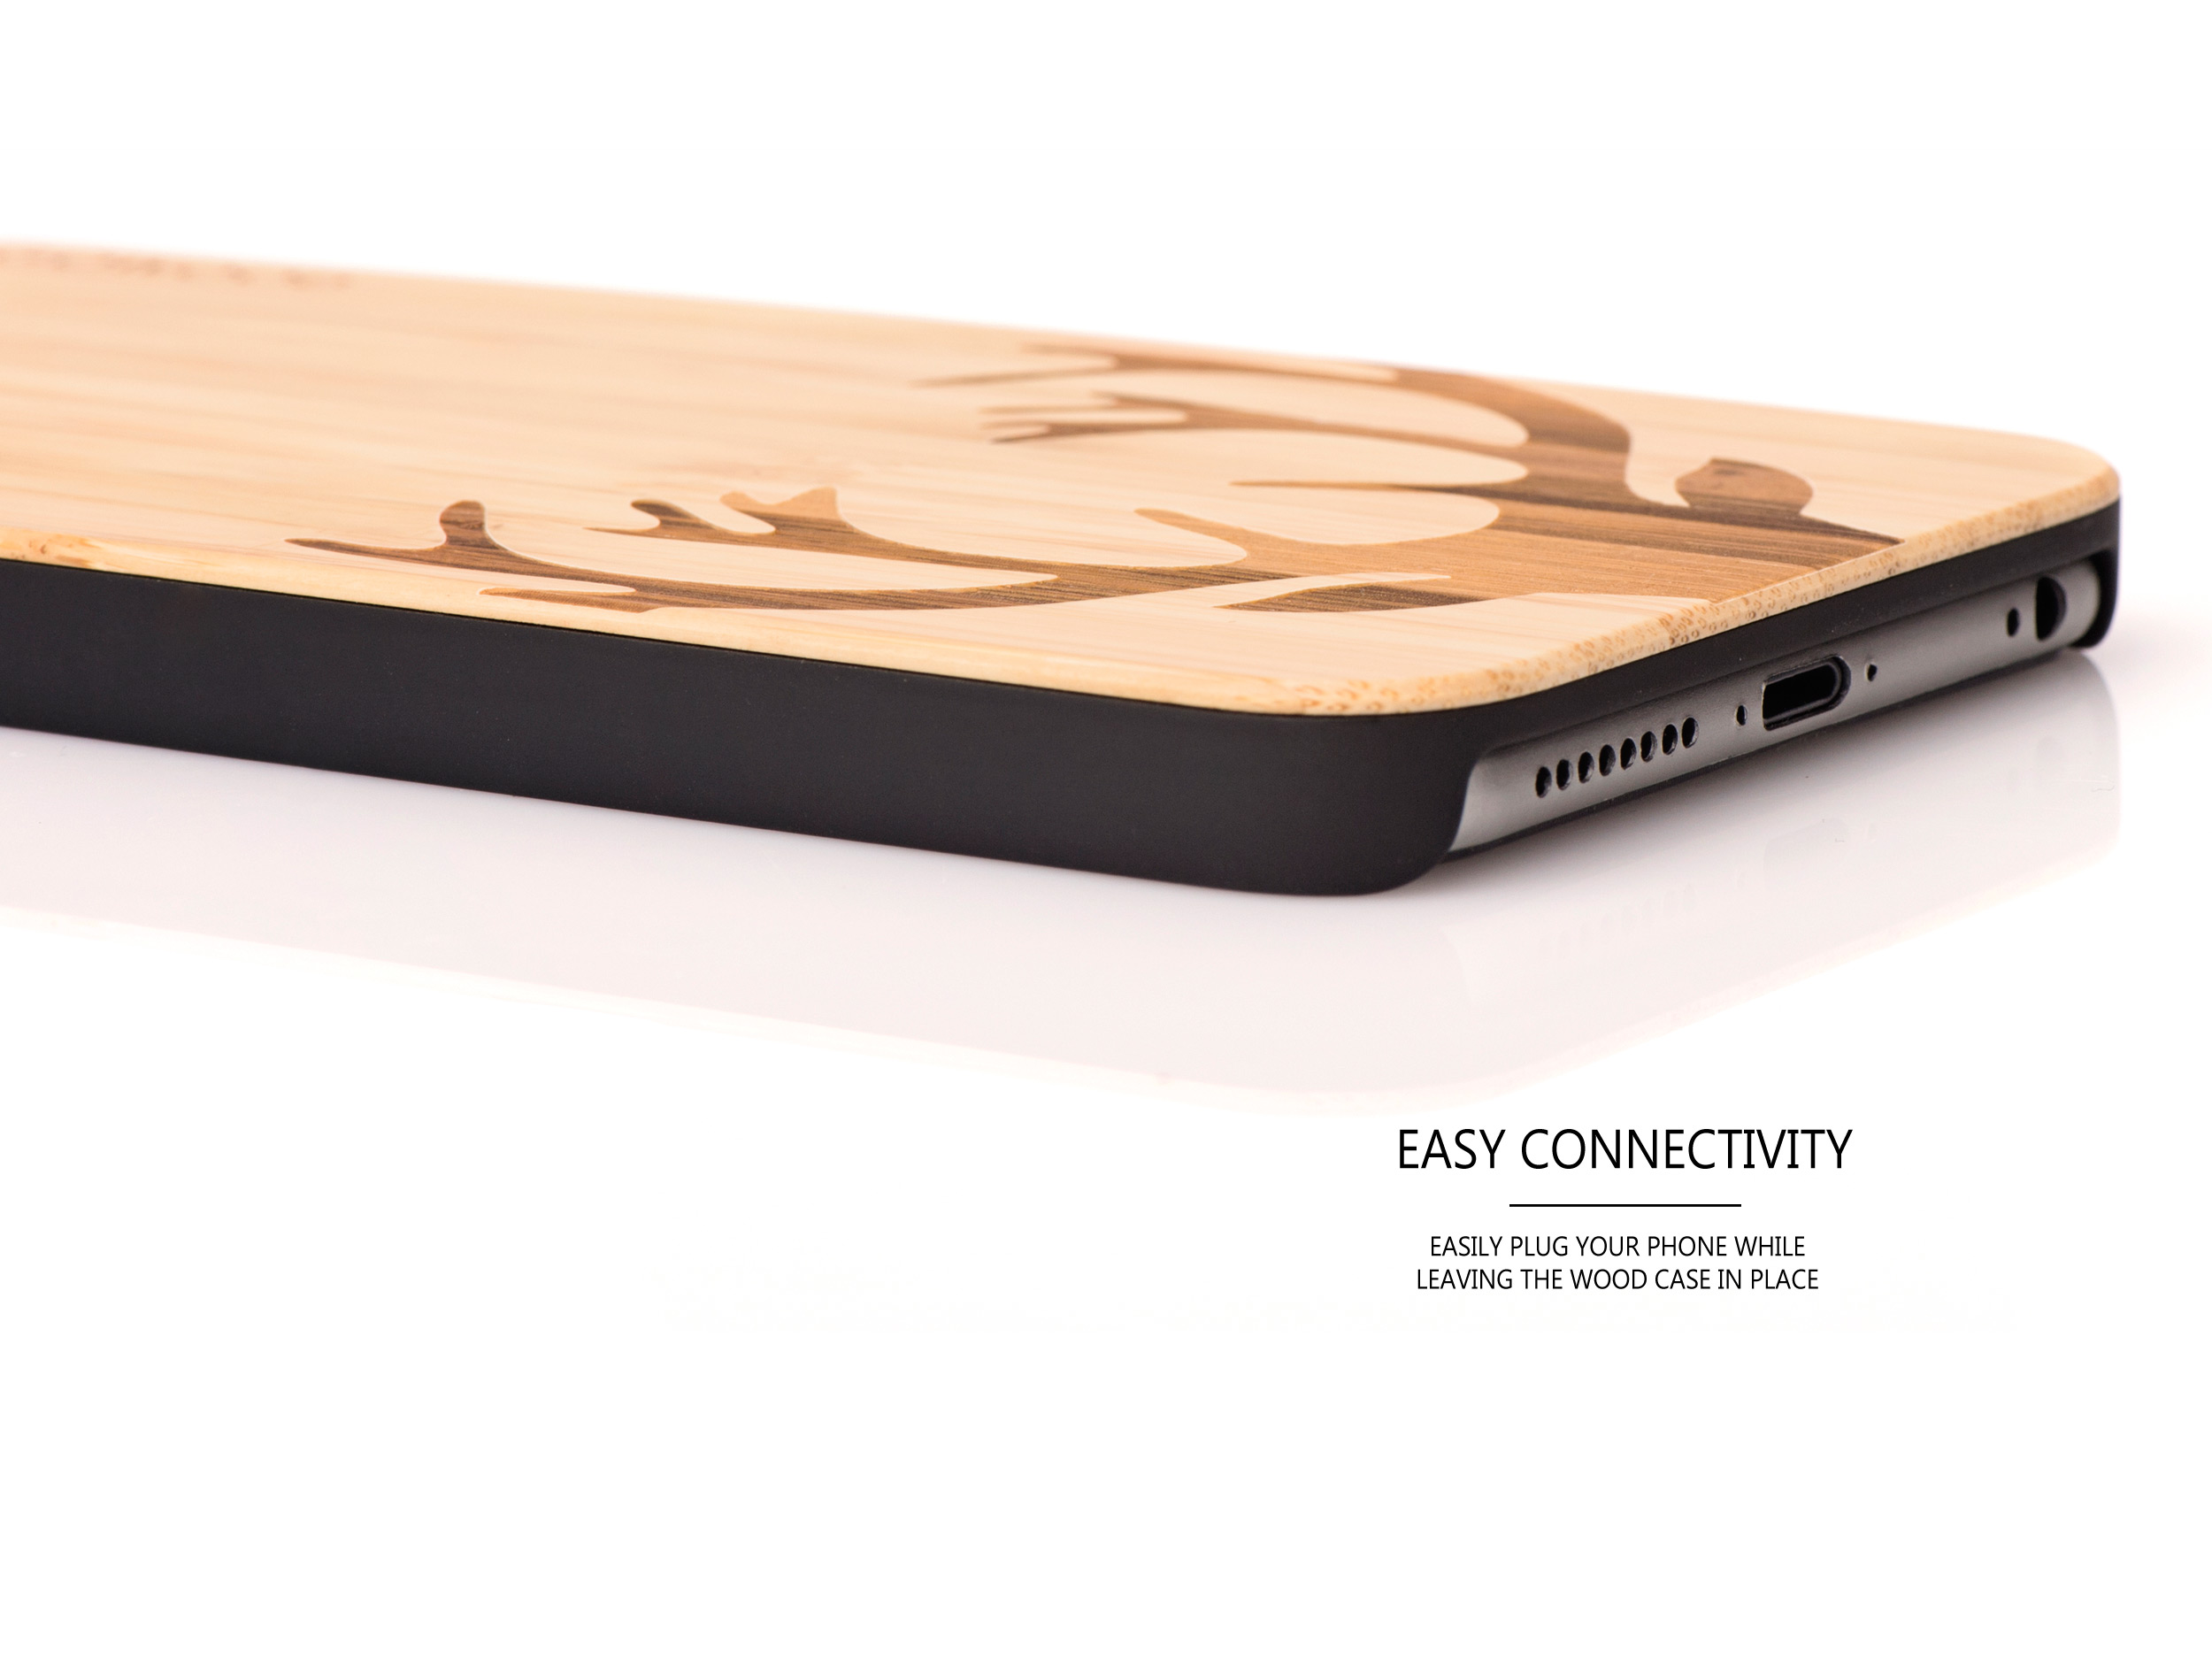 iPhone 6 Plus hoesje van bamboe hout met hert gravering